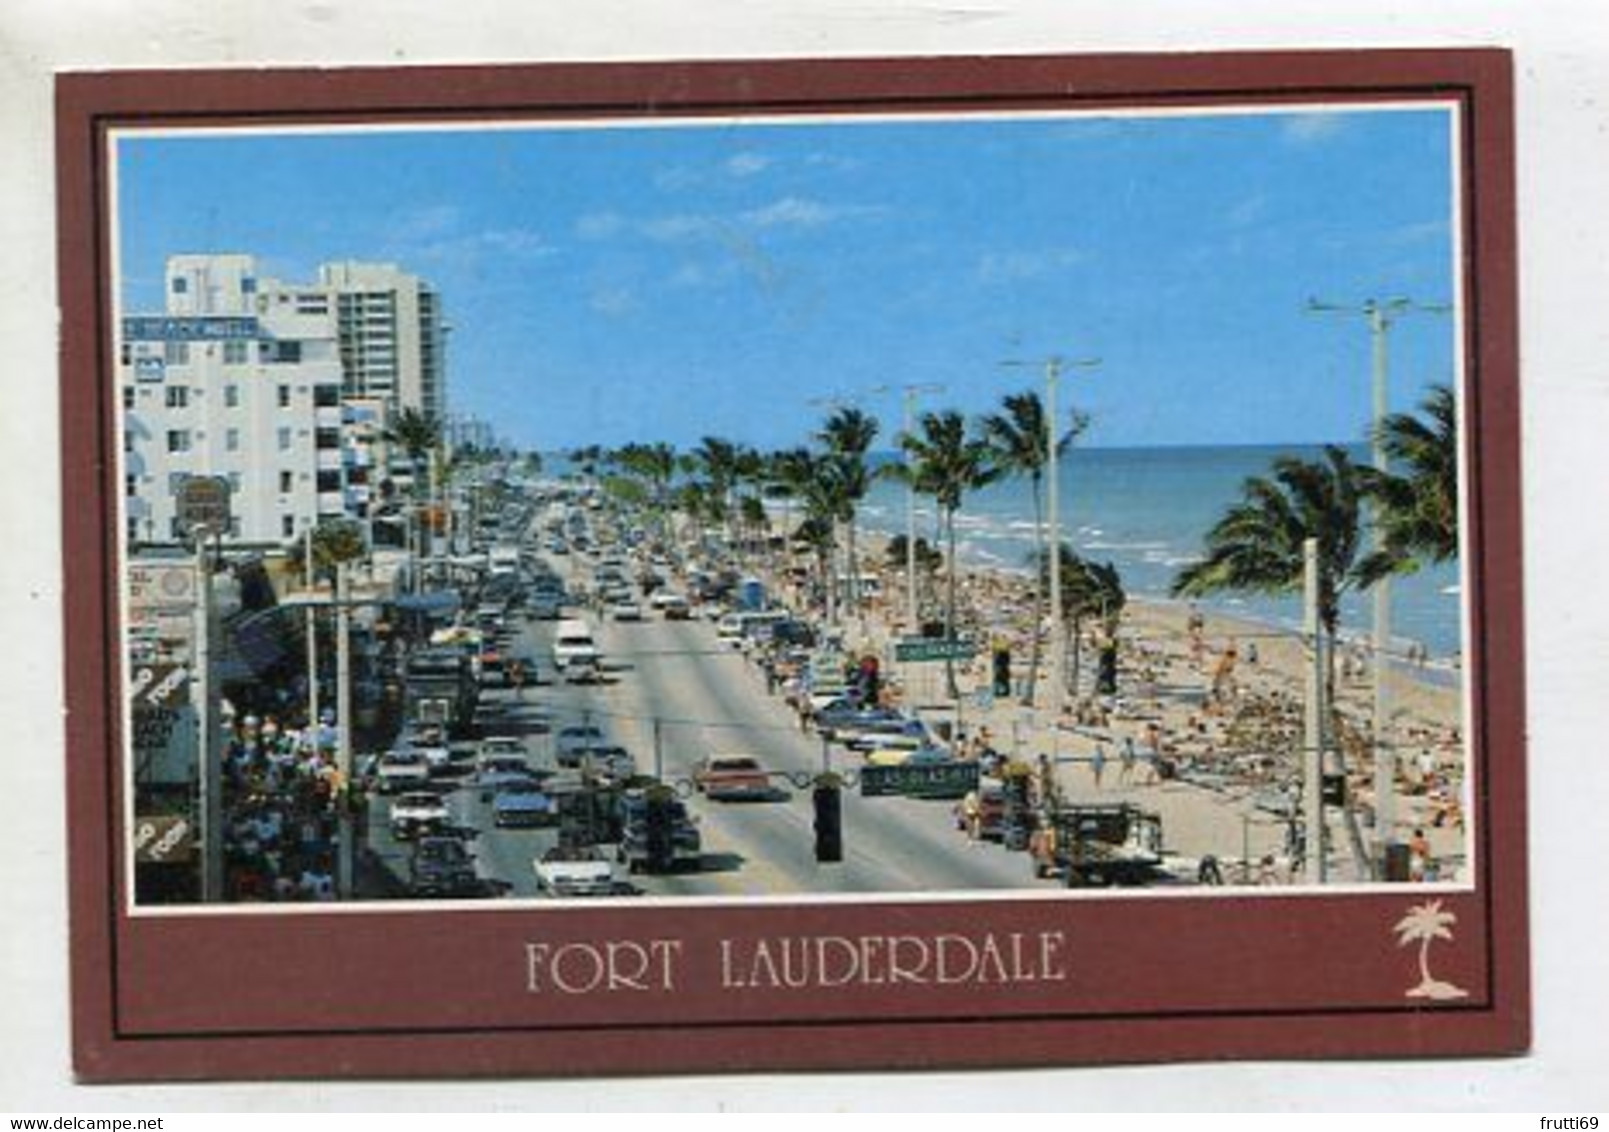 AK 111332 USA - Florida - Fort Lauderdale - Fort Lauderdale